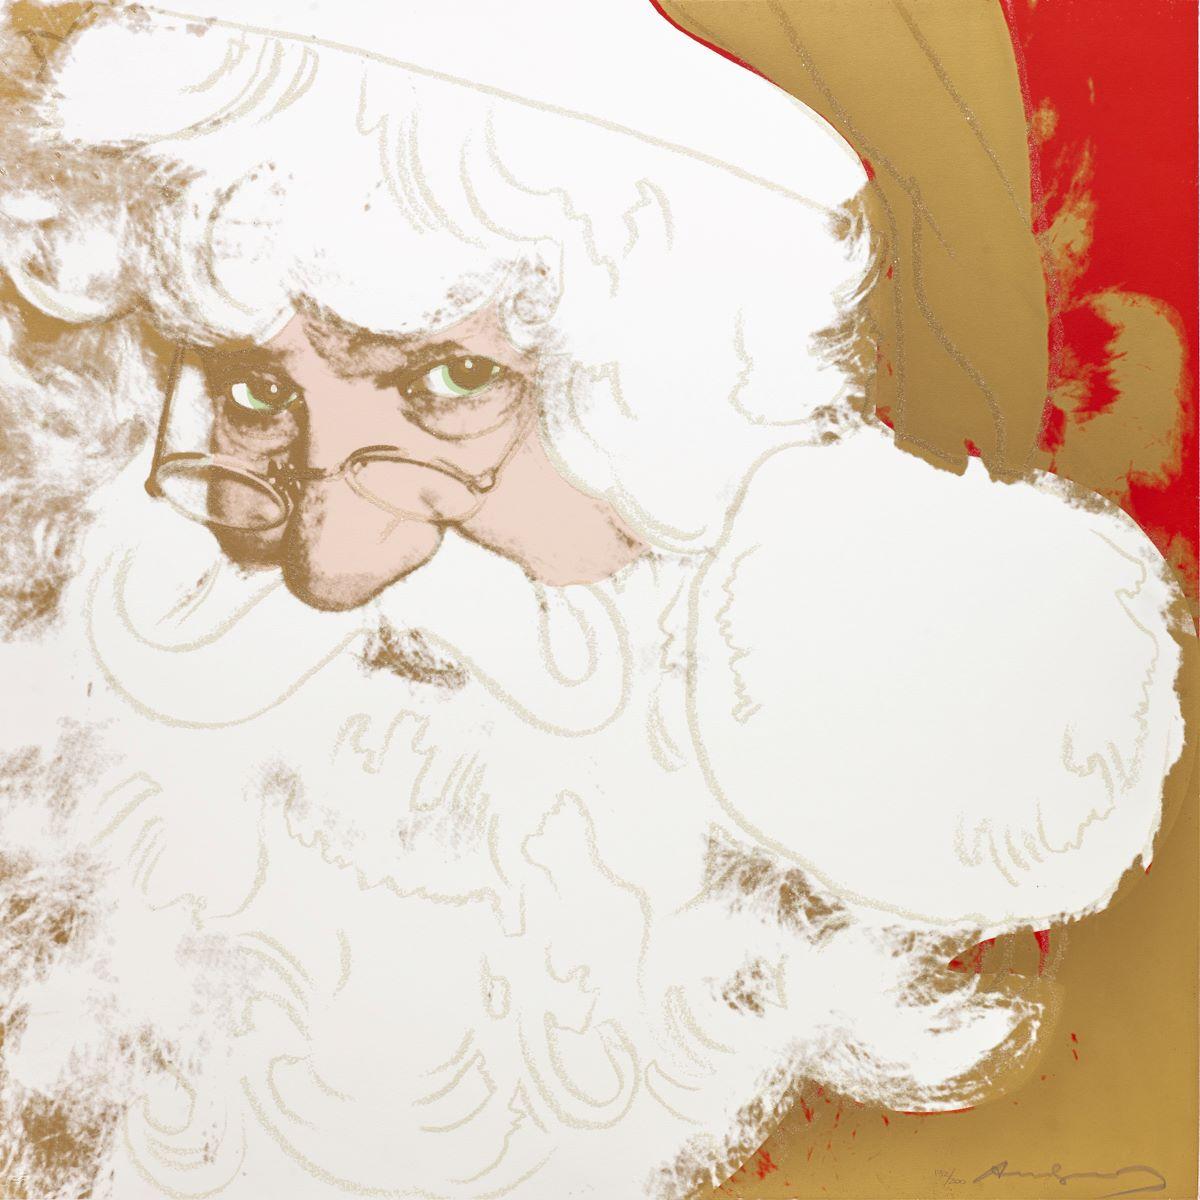 Andy Warhol Figurative Print - Santa Claus, 1981 (FS.II.266, Myths)